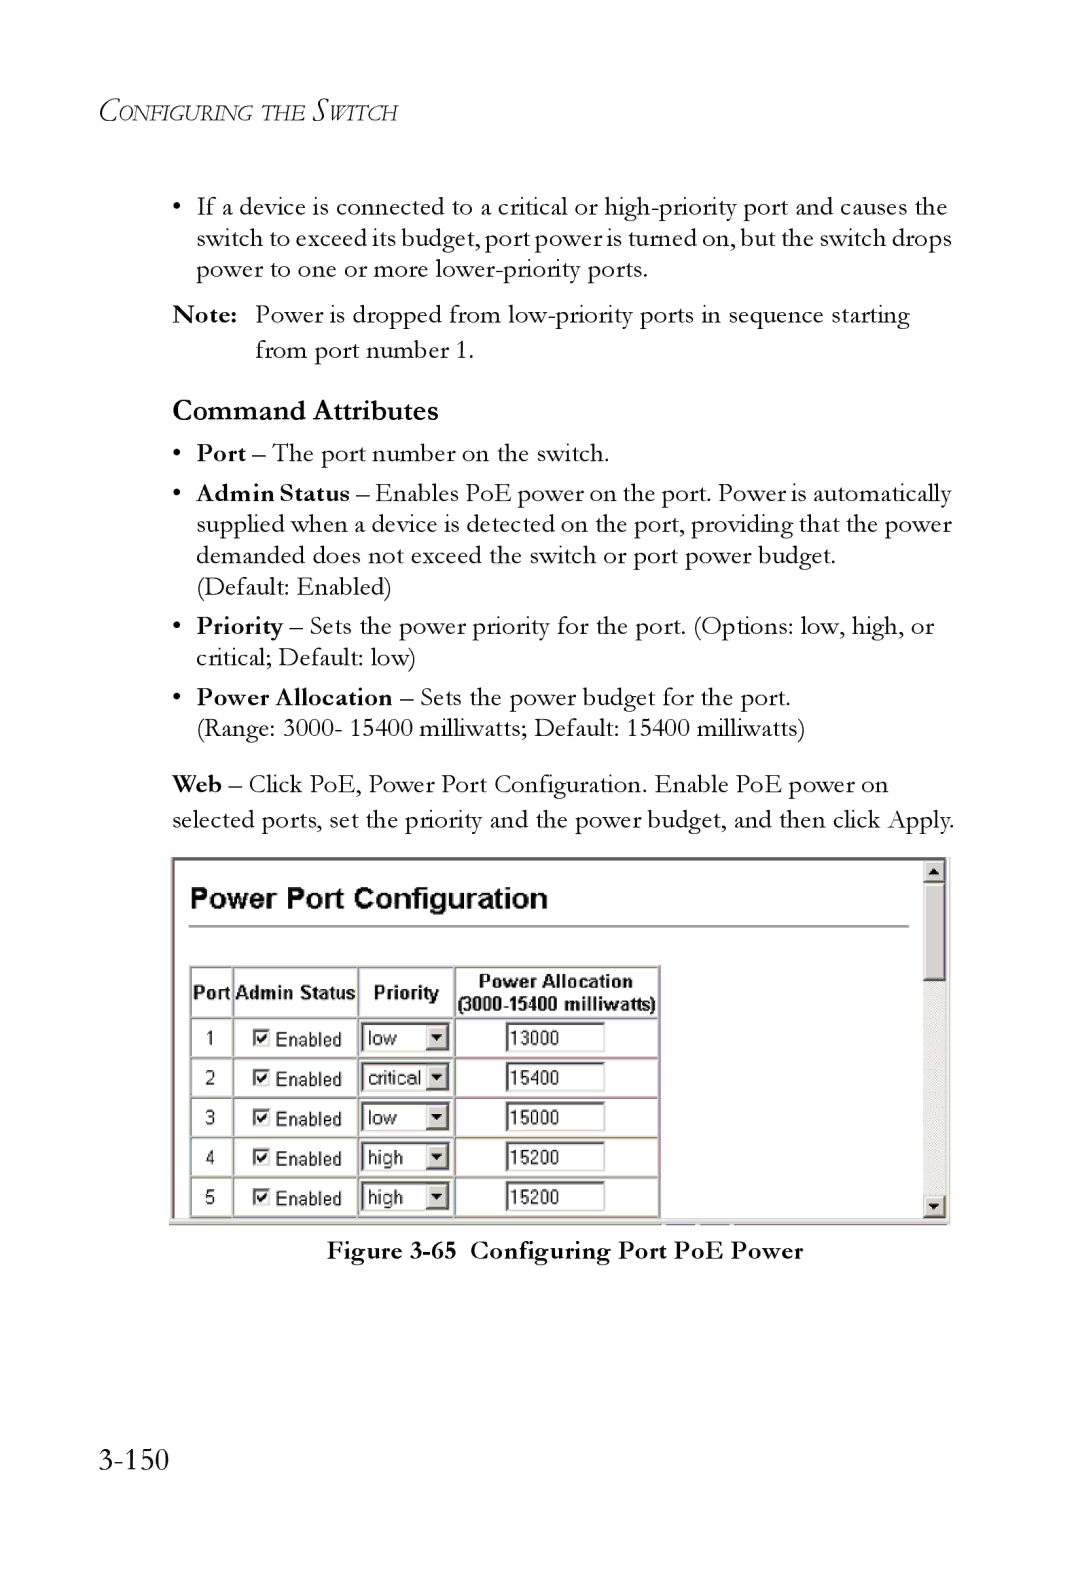 SMC Networks SMC6824M manual 150, Configuring Port PoE Power 